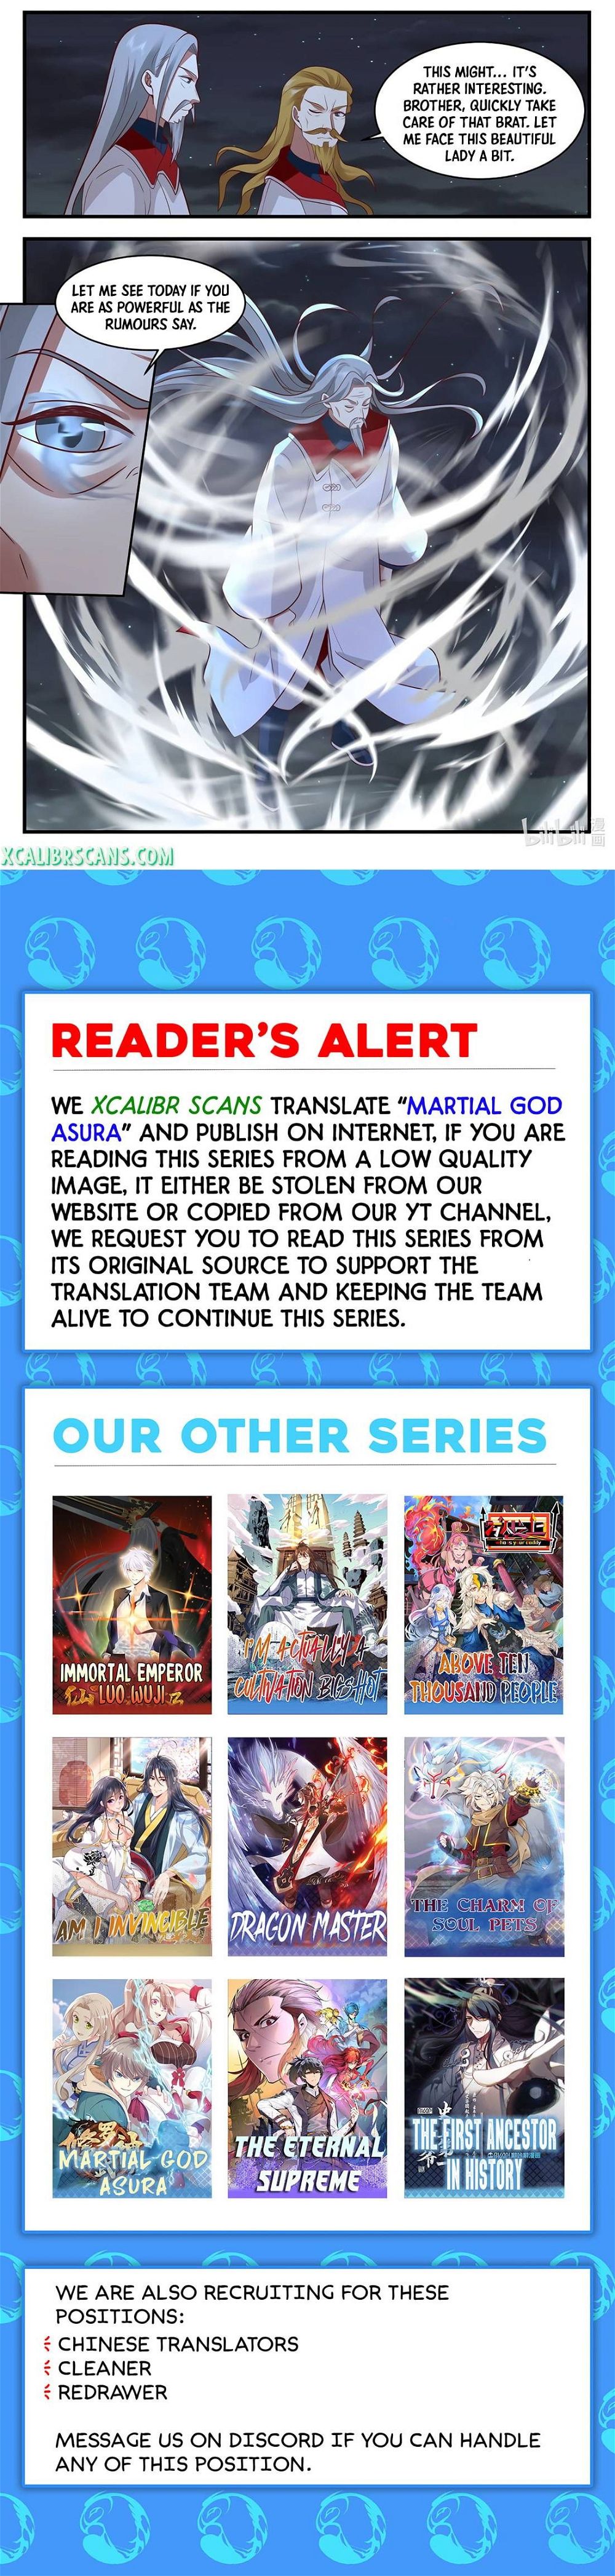 Martial God Asura Chapter 537 - Page 10